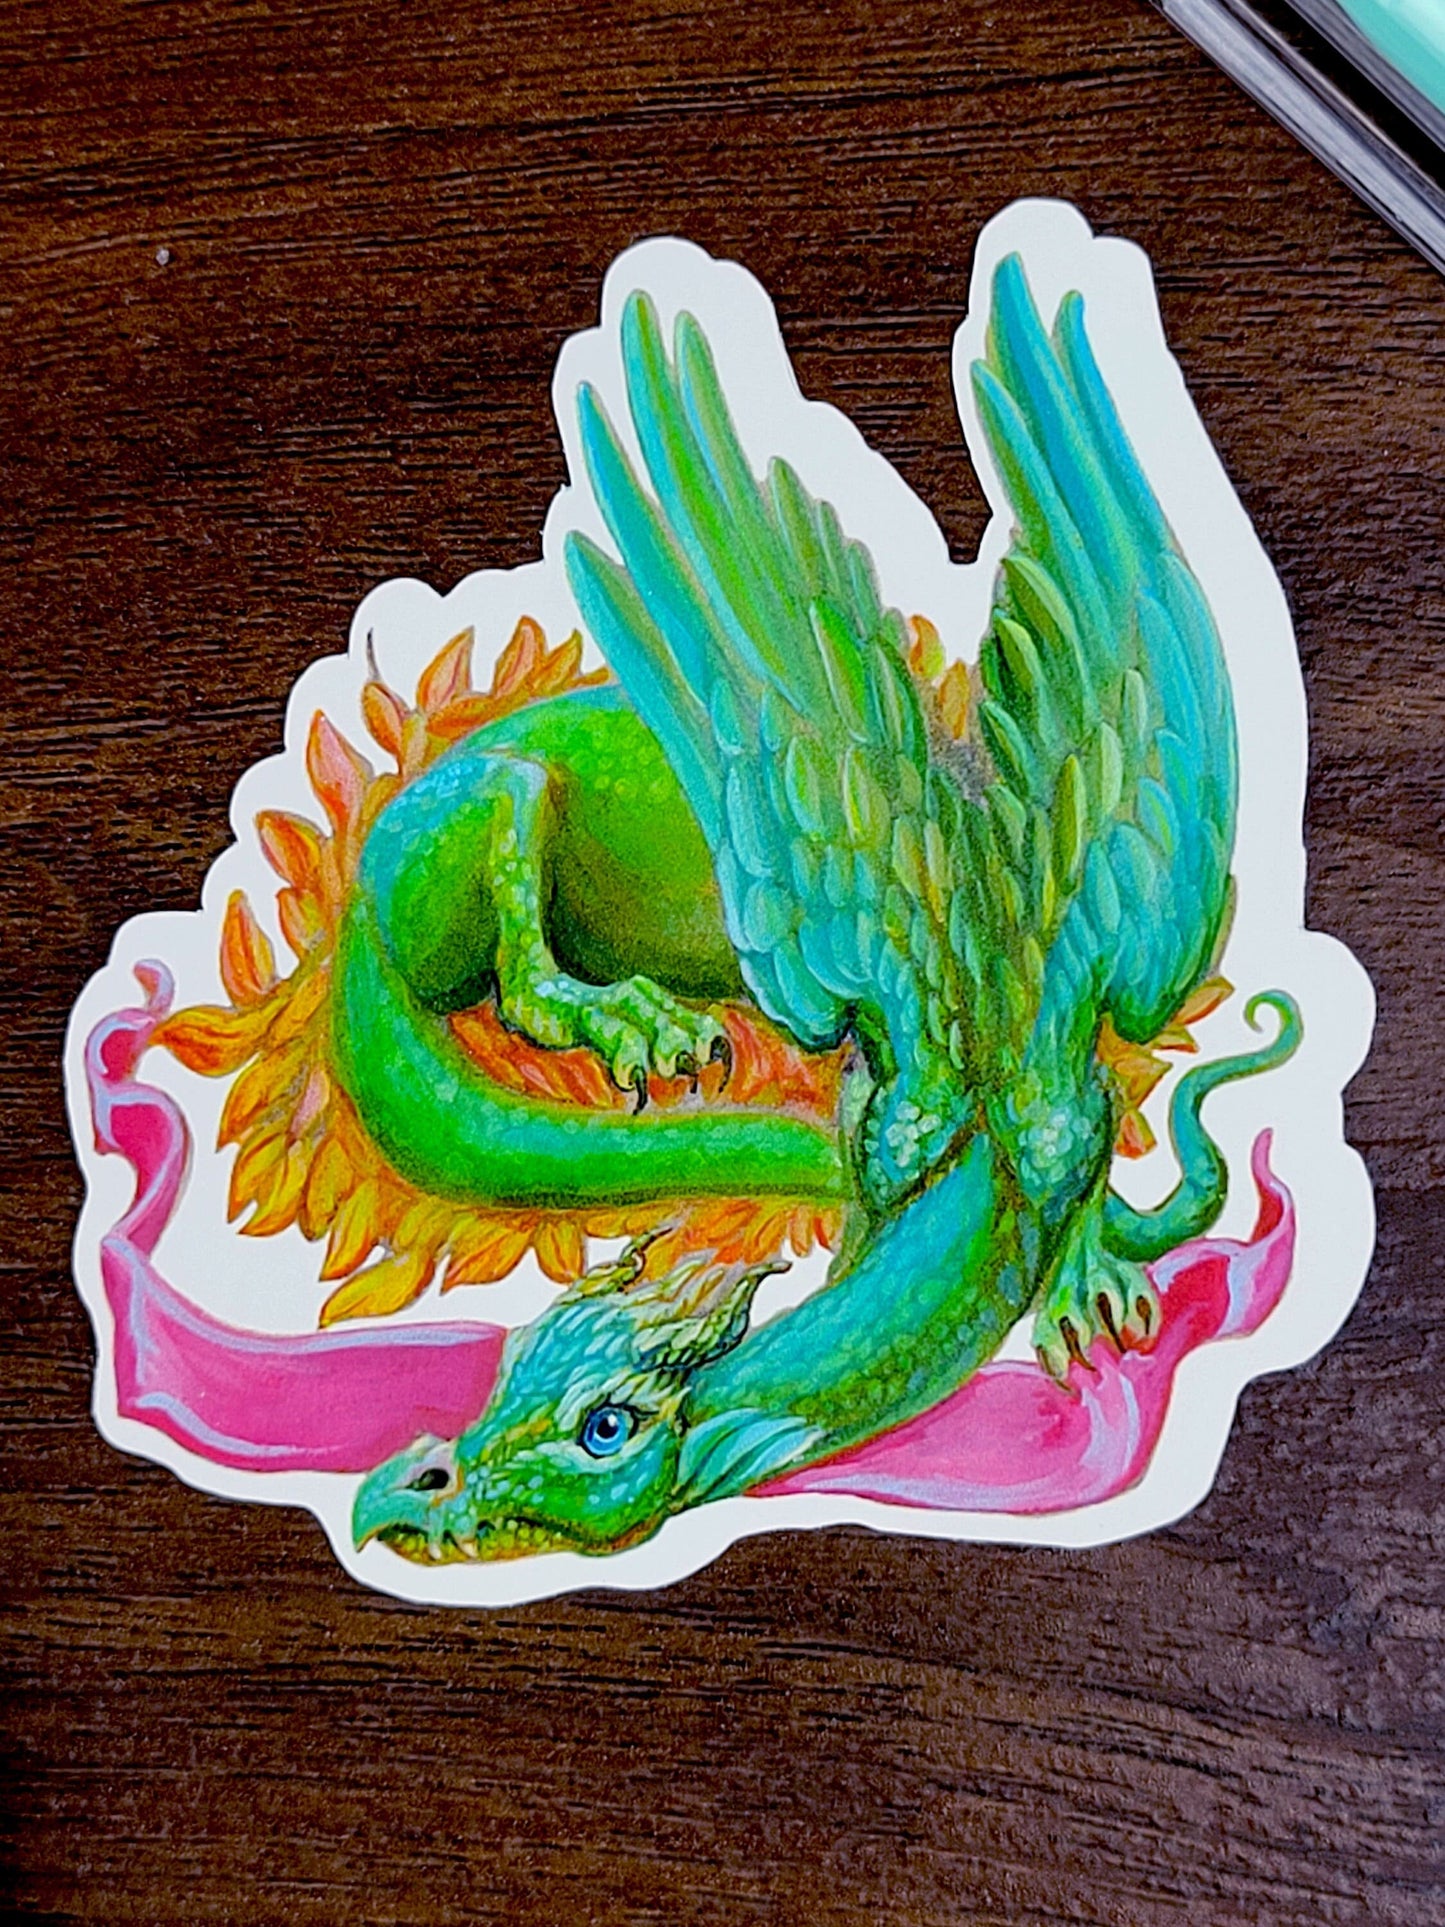 Fantasy Dragon Sticker. Ash Tree Dragon. Laptop Sticker. Junk Journal. Feather Dragon. Mythical Creature. Pagan Art. Stationary.